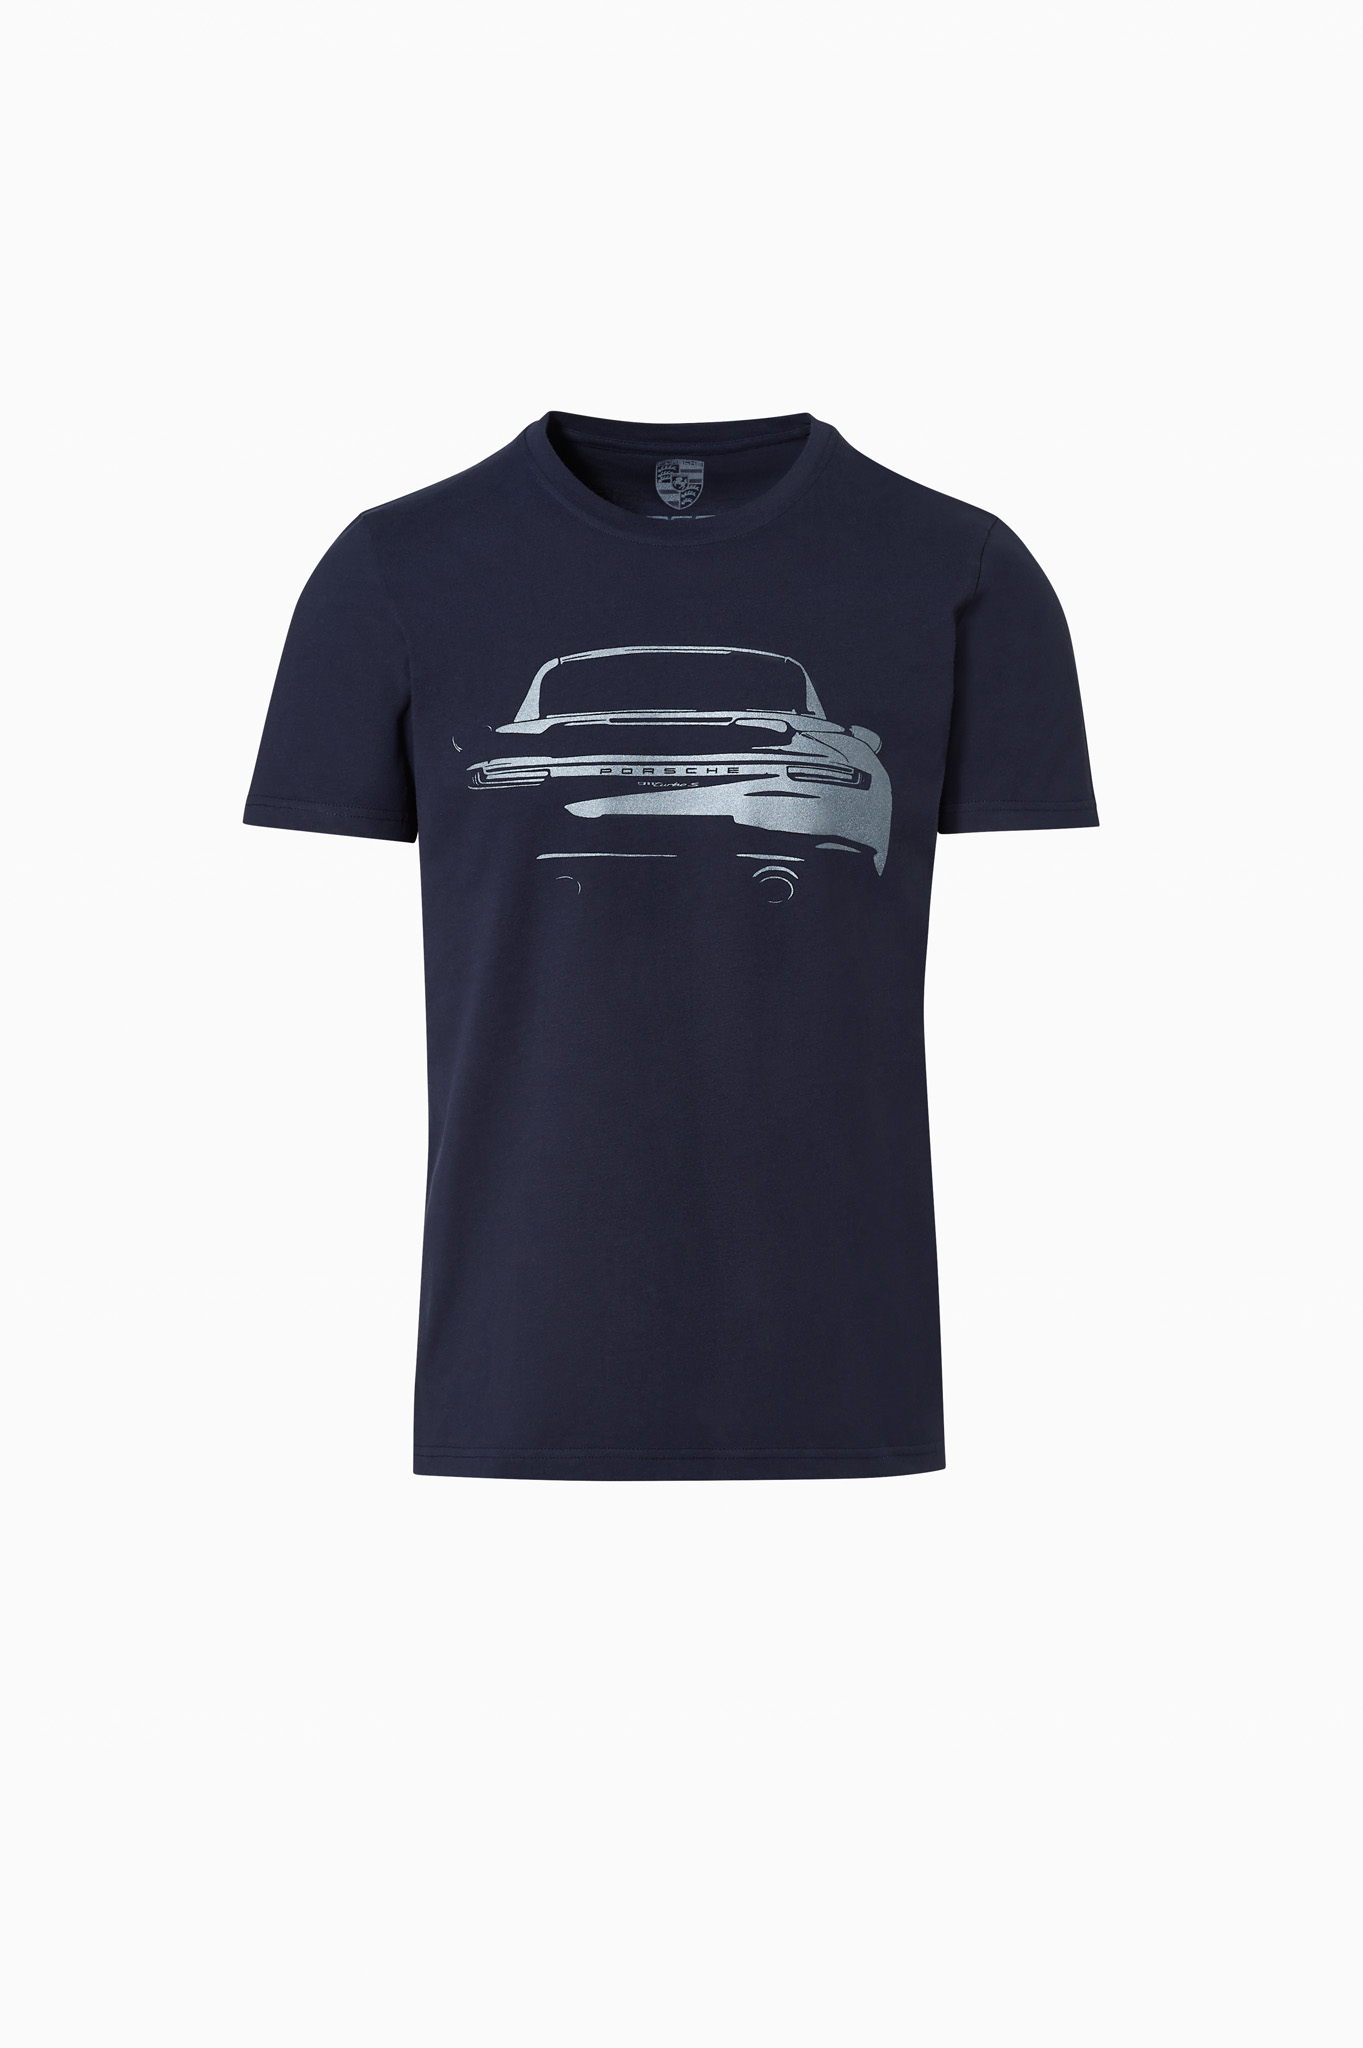 Porsche T-shirt collection Turbo